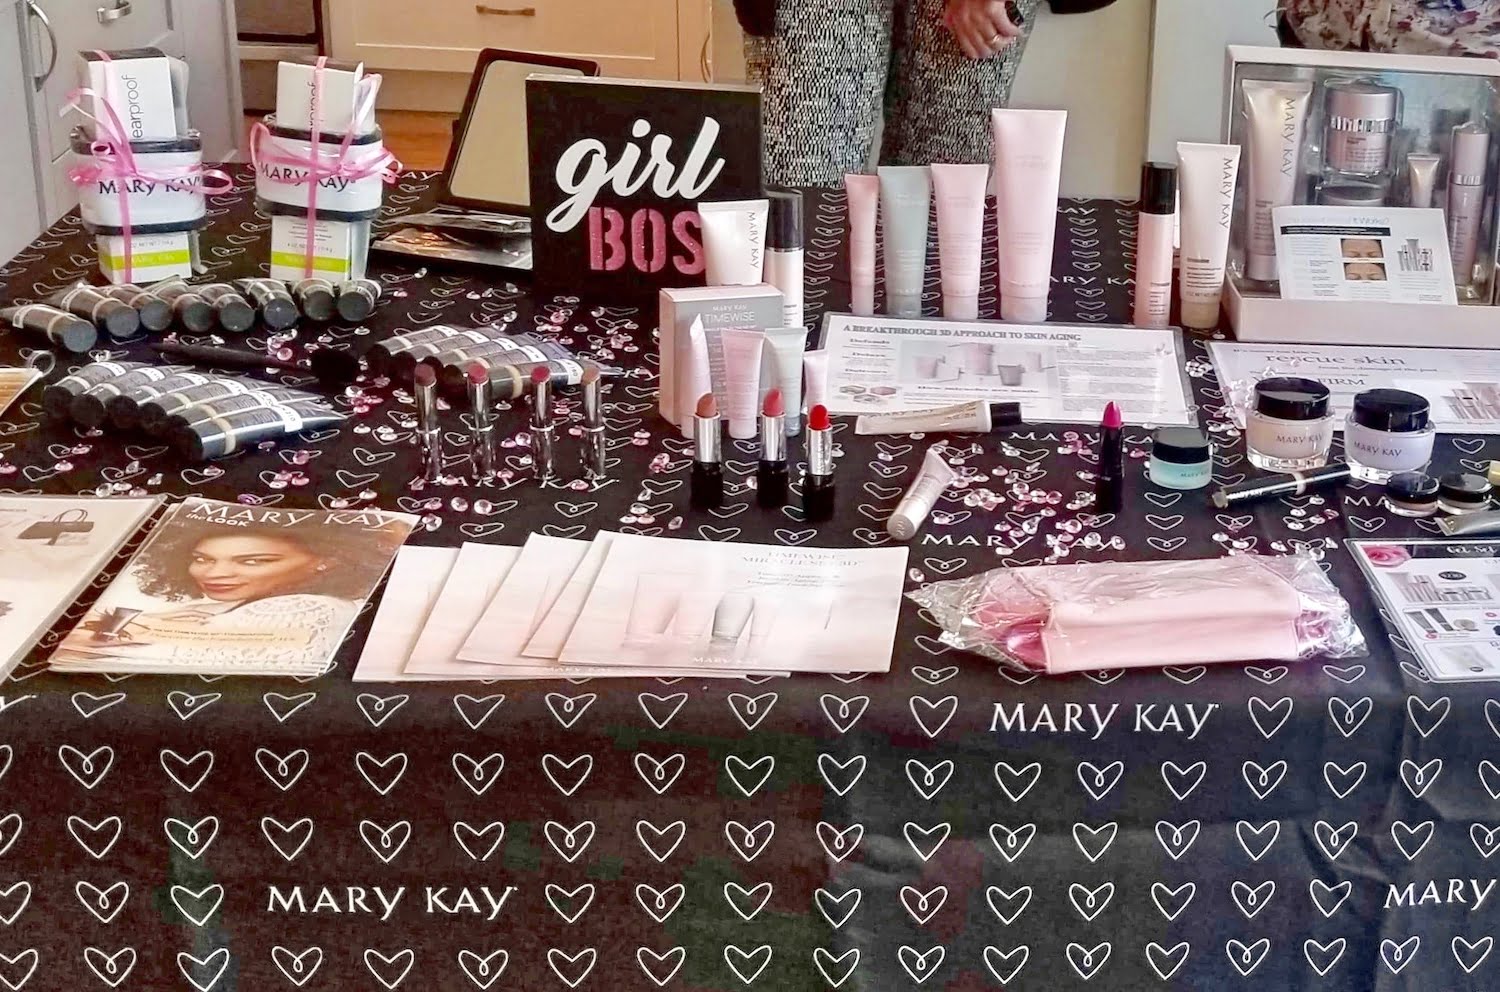 Table Display of Mary Kay Makeup